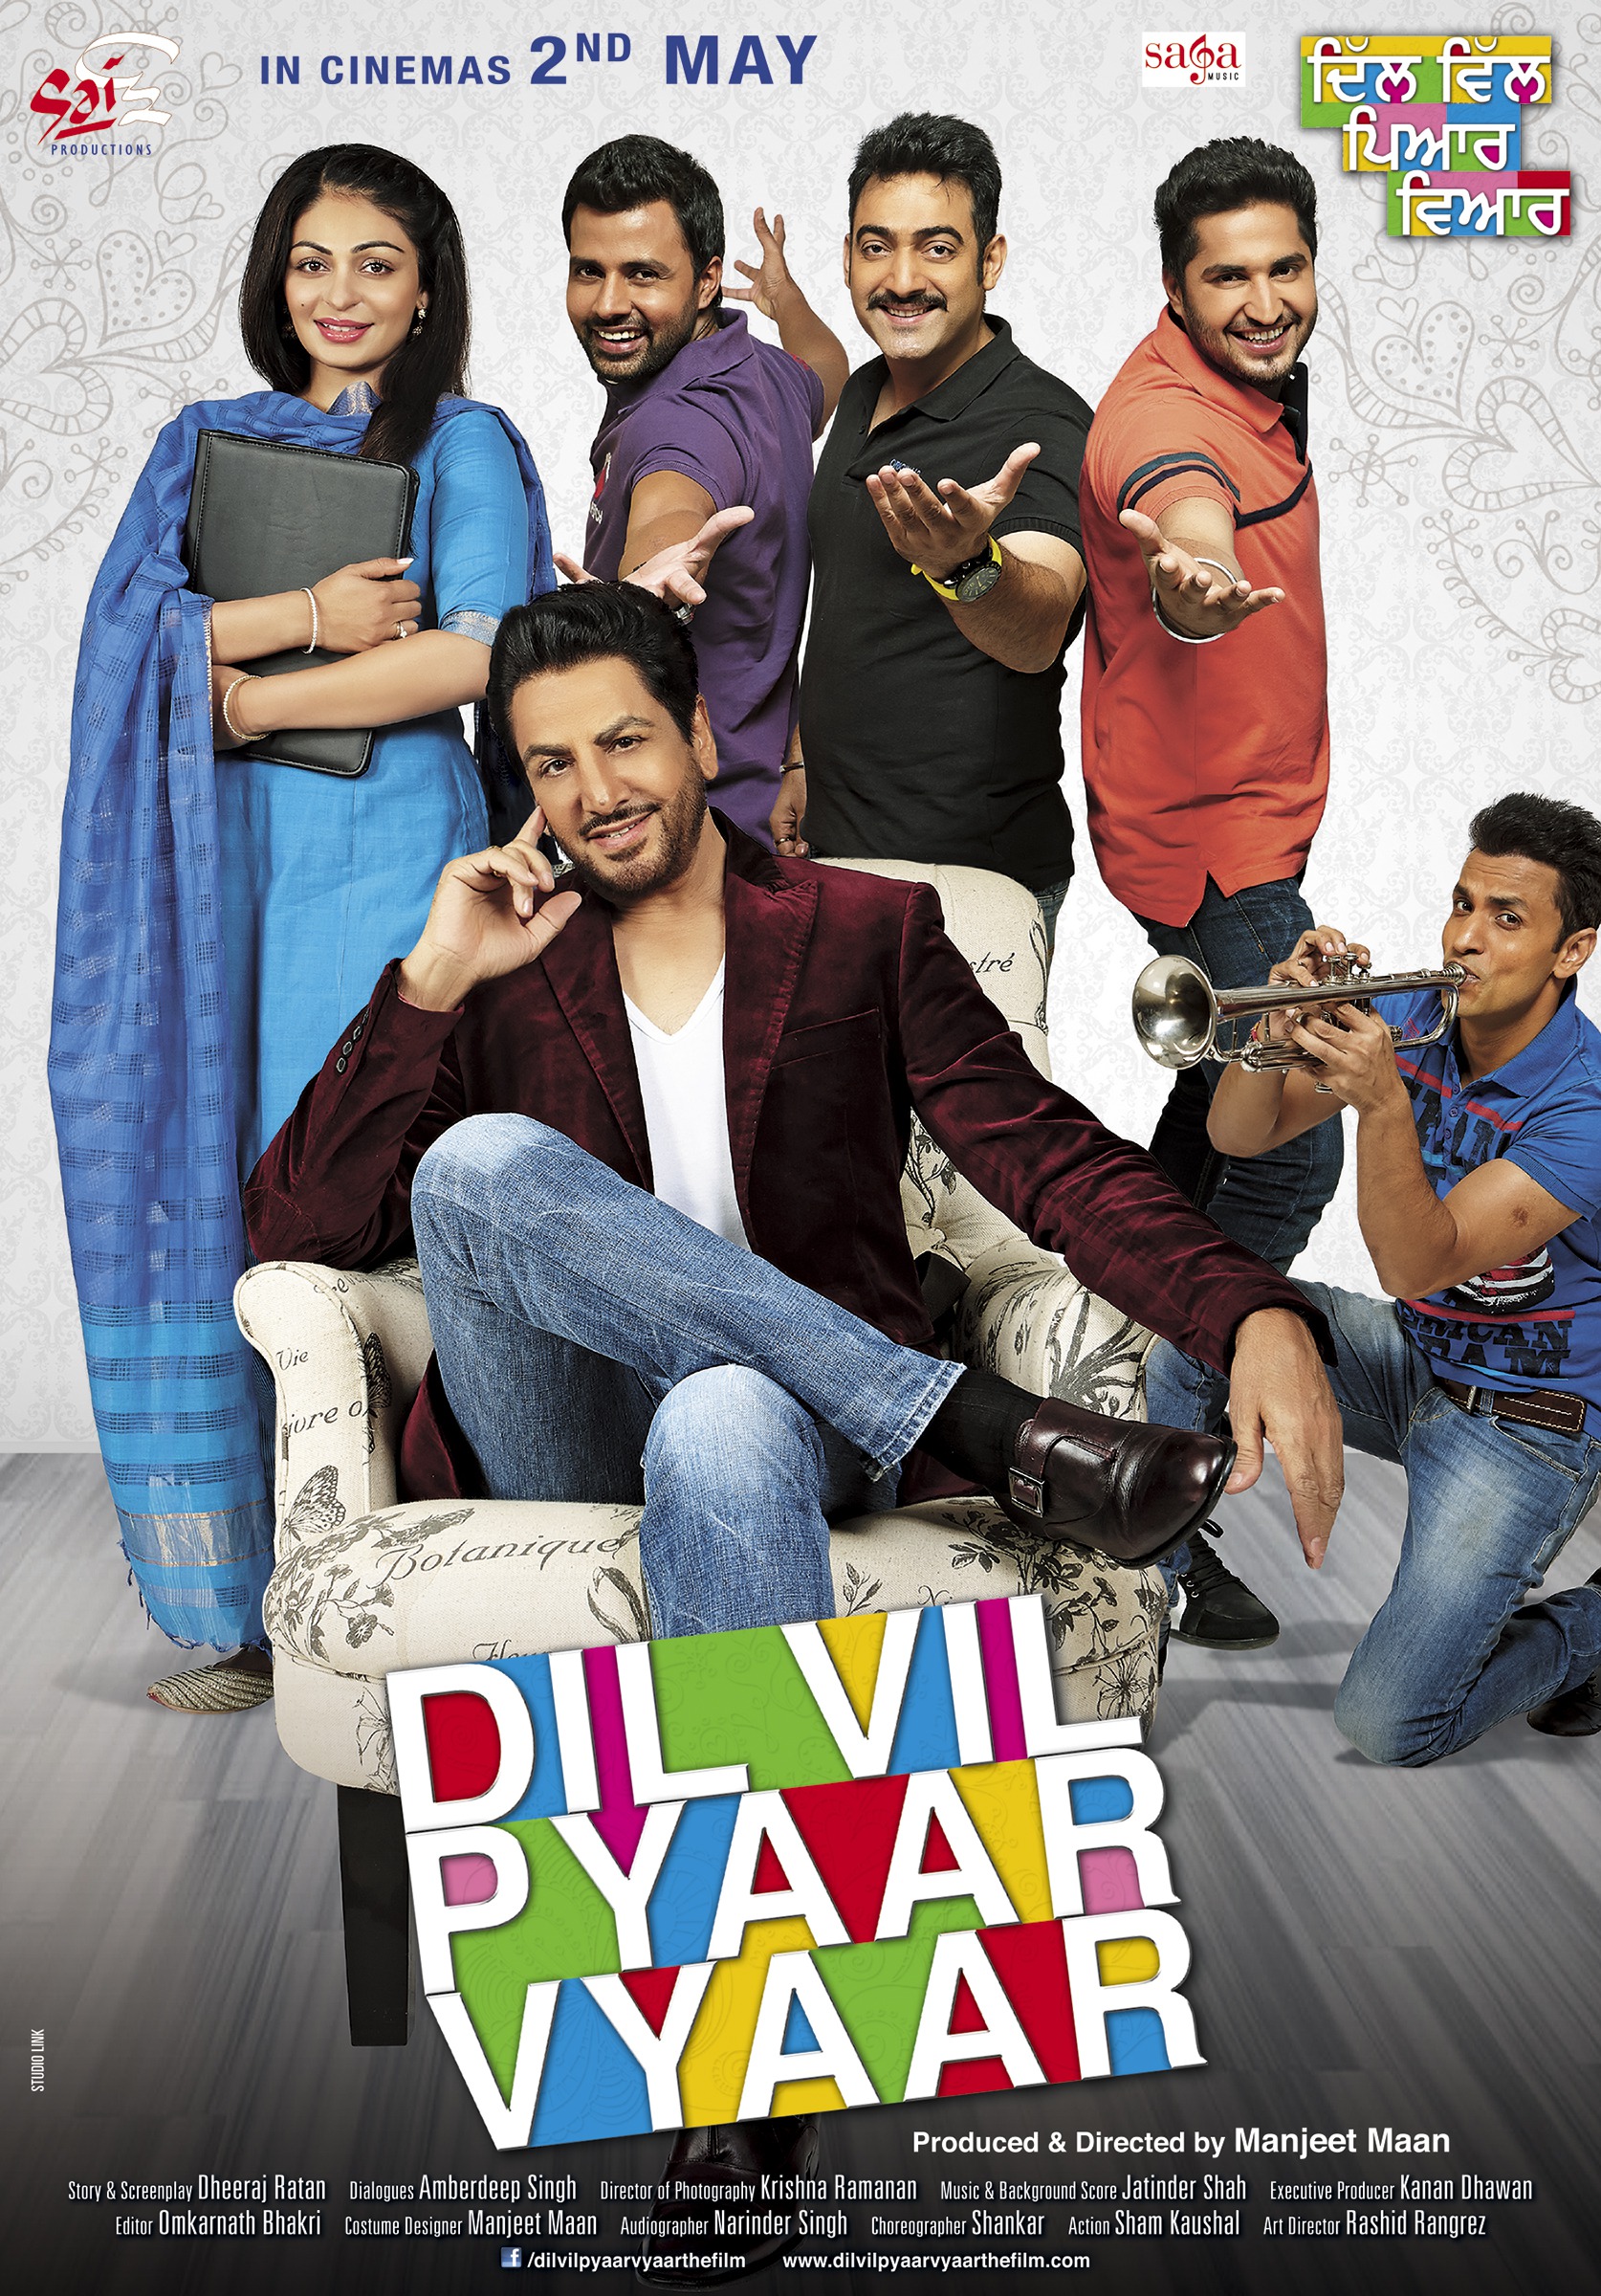 Mega Sized Movie Poster Image for Dil Vil Pyaar Vyaar (#3 of 3)